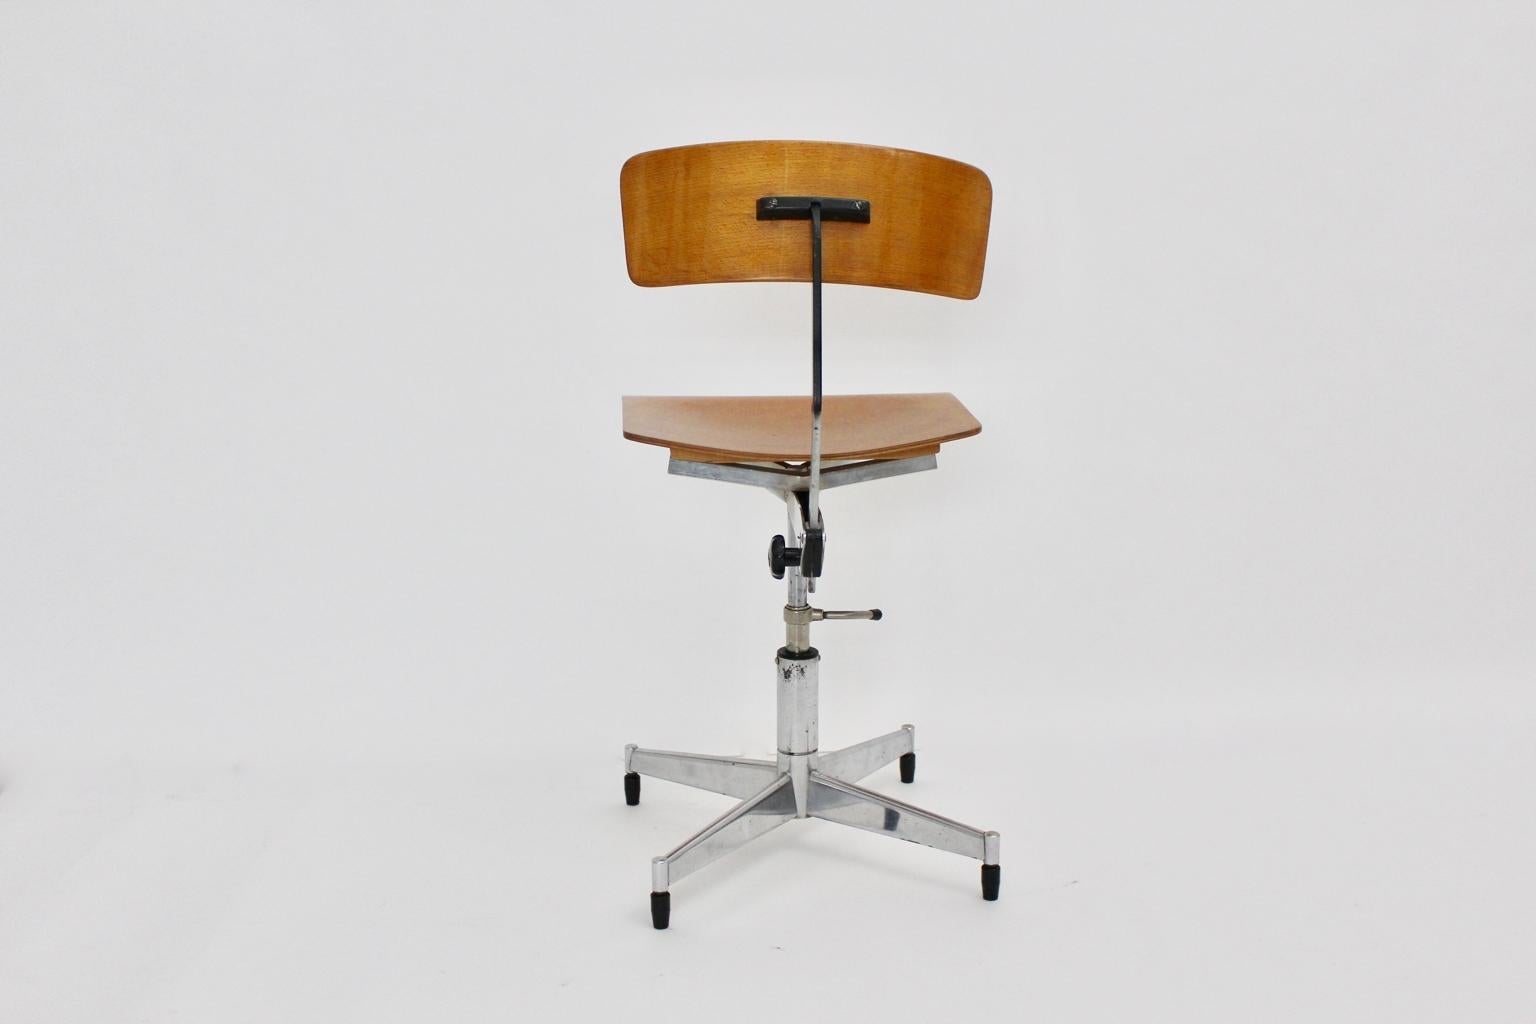 Danish Mid-Century Modern Swiveling Desk Chair by Jorgen Rasmussen 1950s Denmark